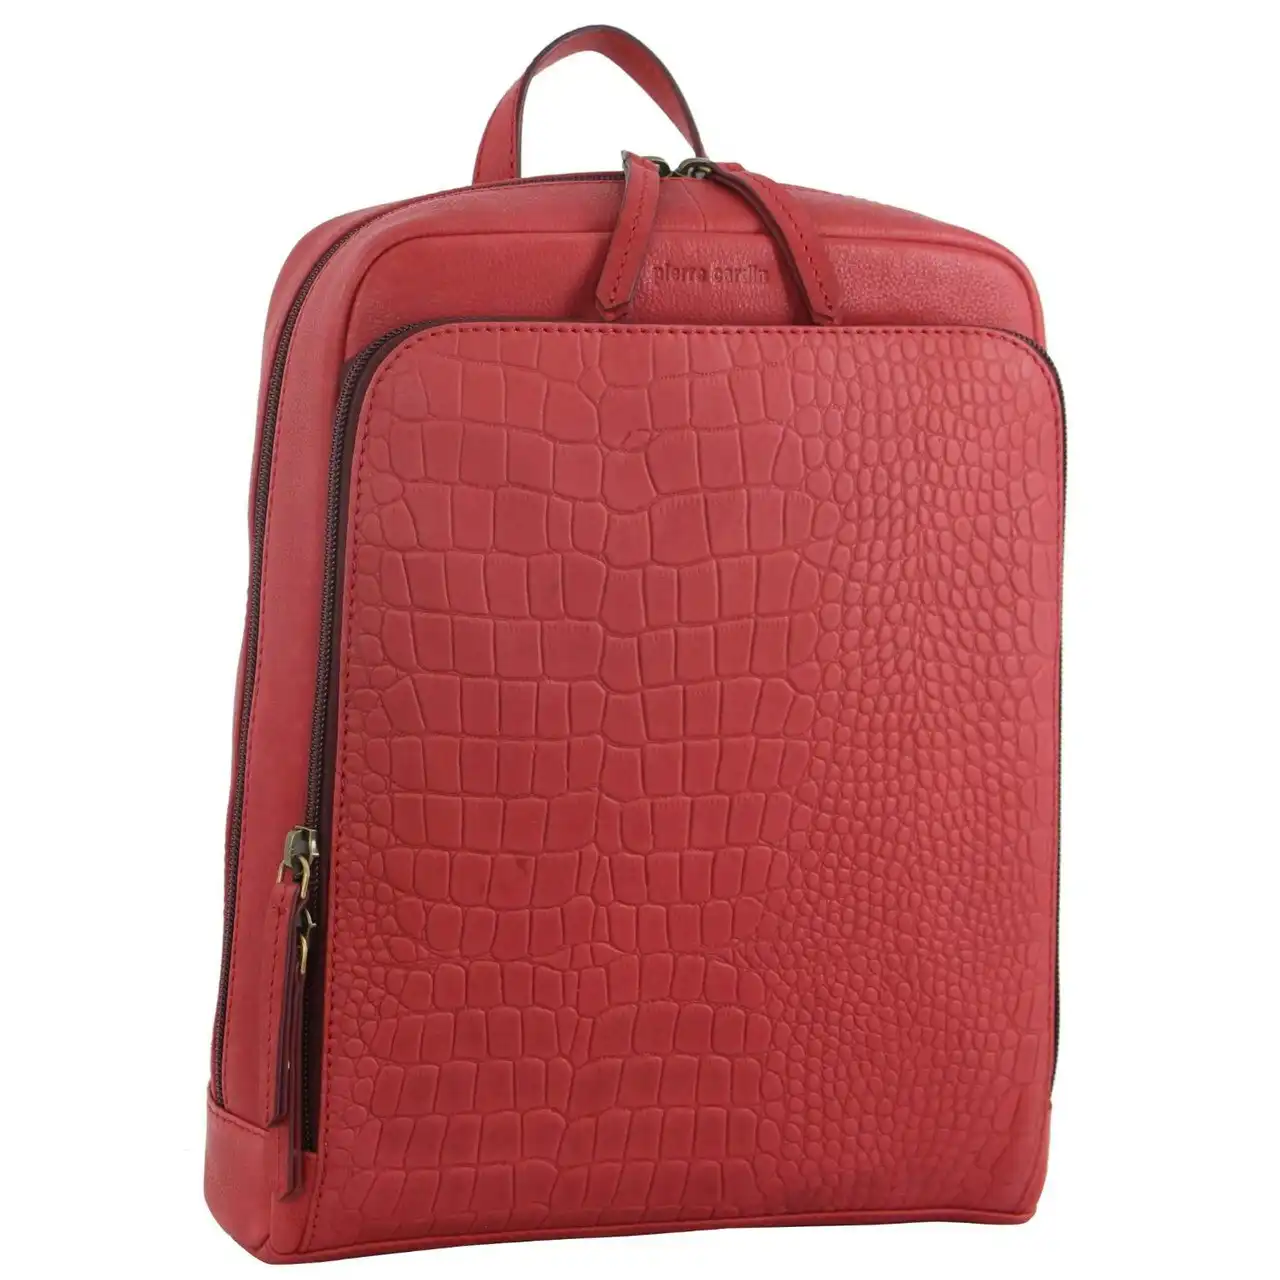 Pierre Cardin Ladies Soft Croc 29x24cm Embossed Leather Backpack Women Bag Red